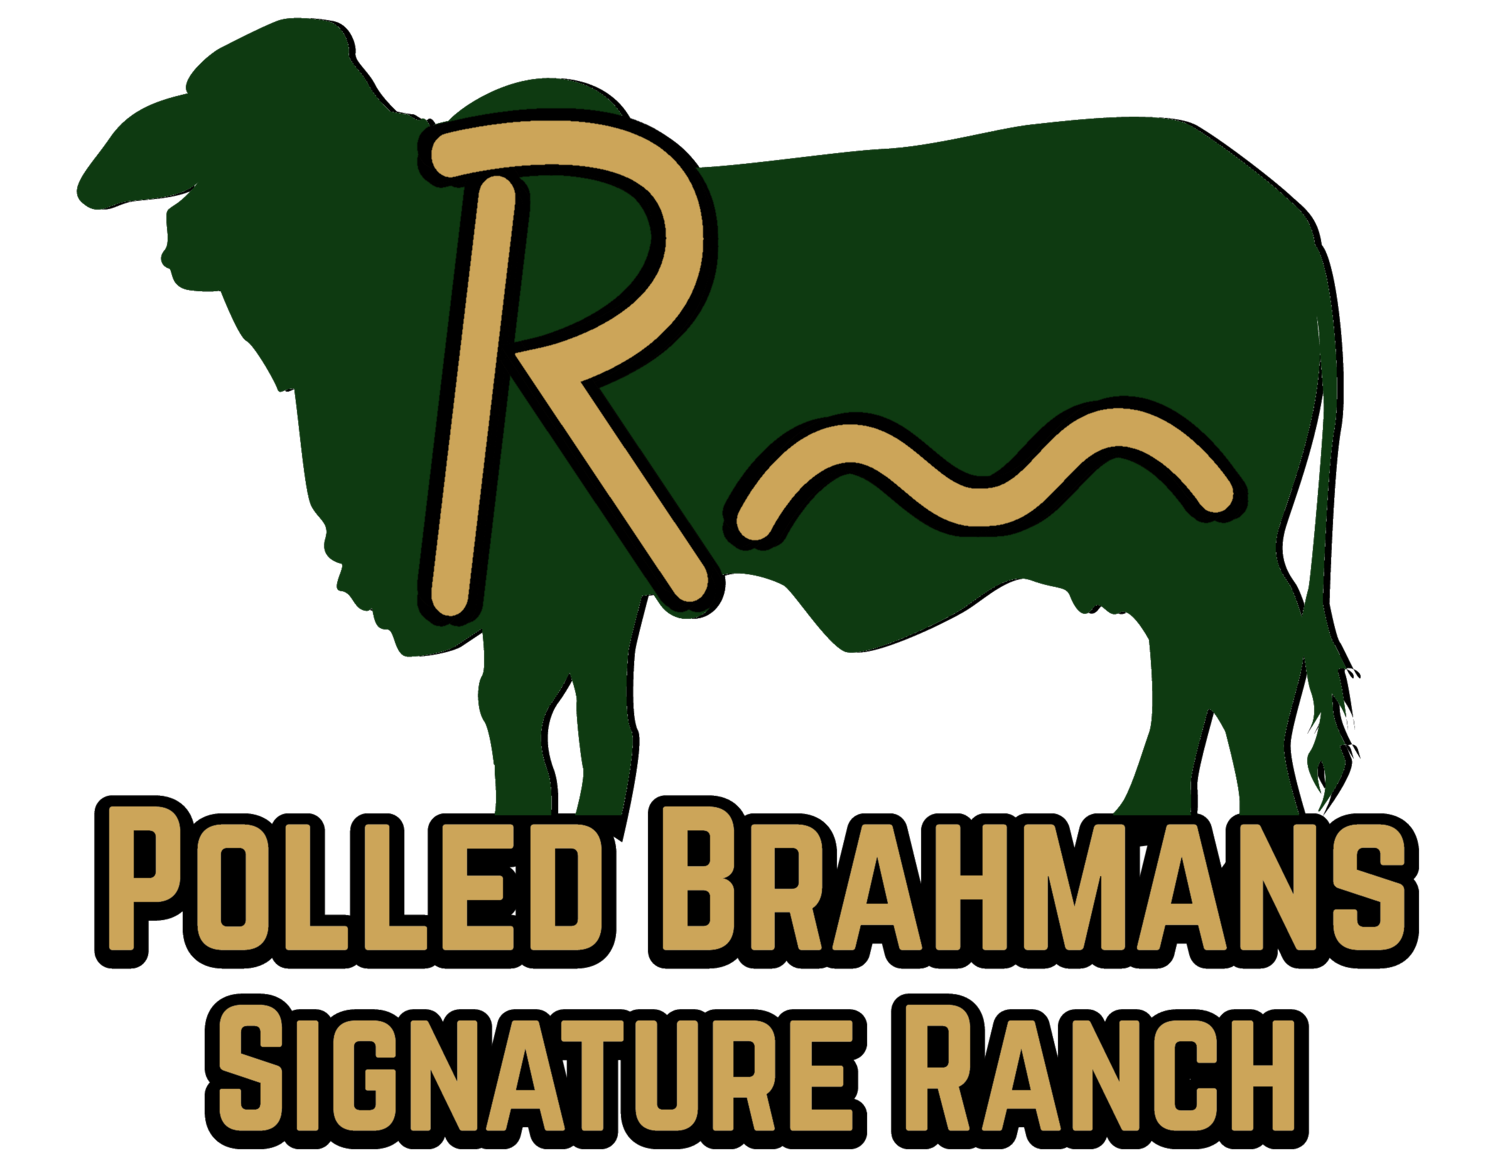 Signature Ranch Polled Brahmans